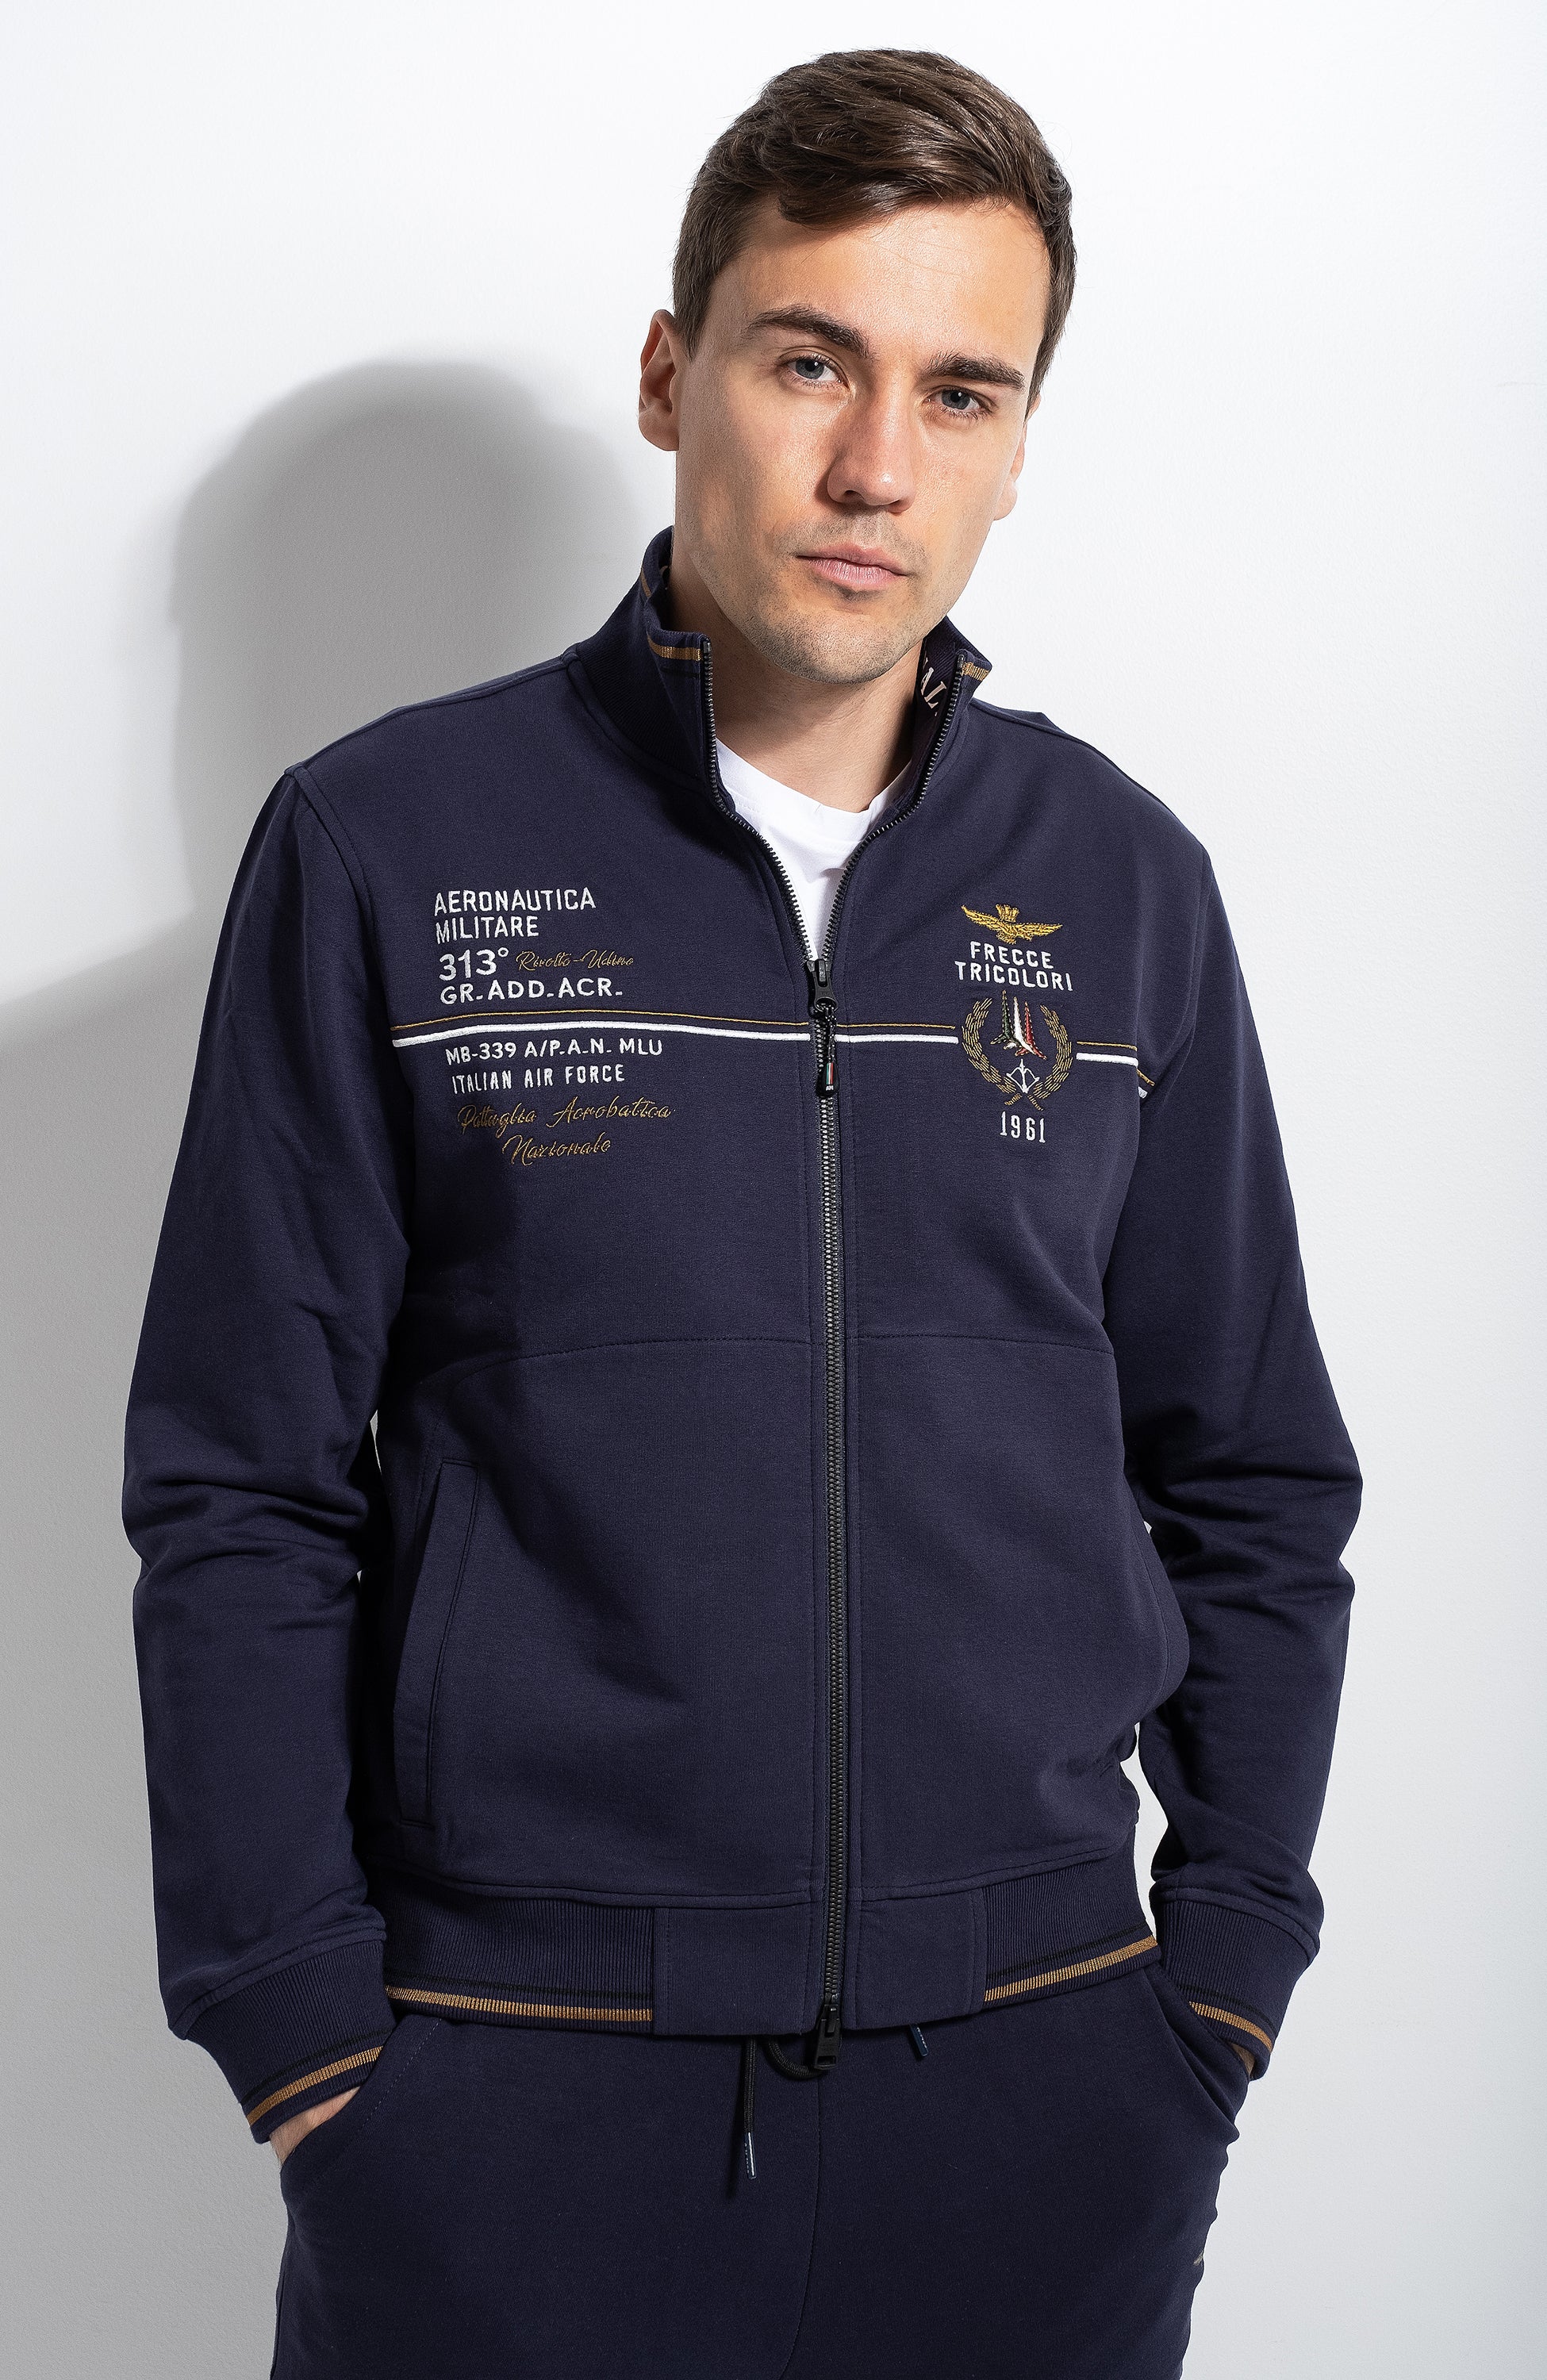 Zipped sweatshirt with embroidery AERONAUTICA MILITARE for men